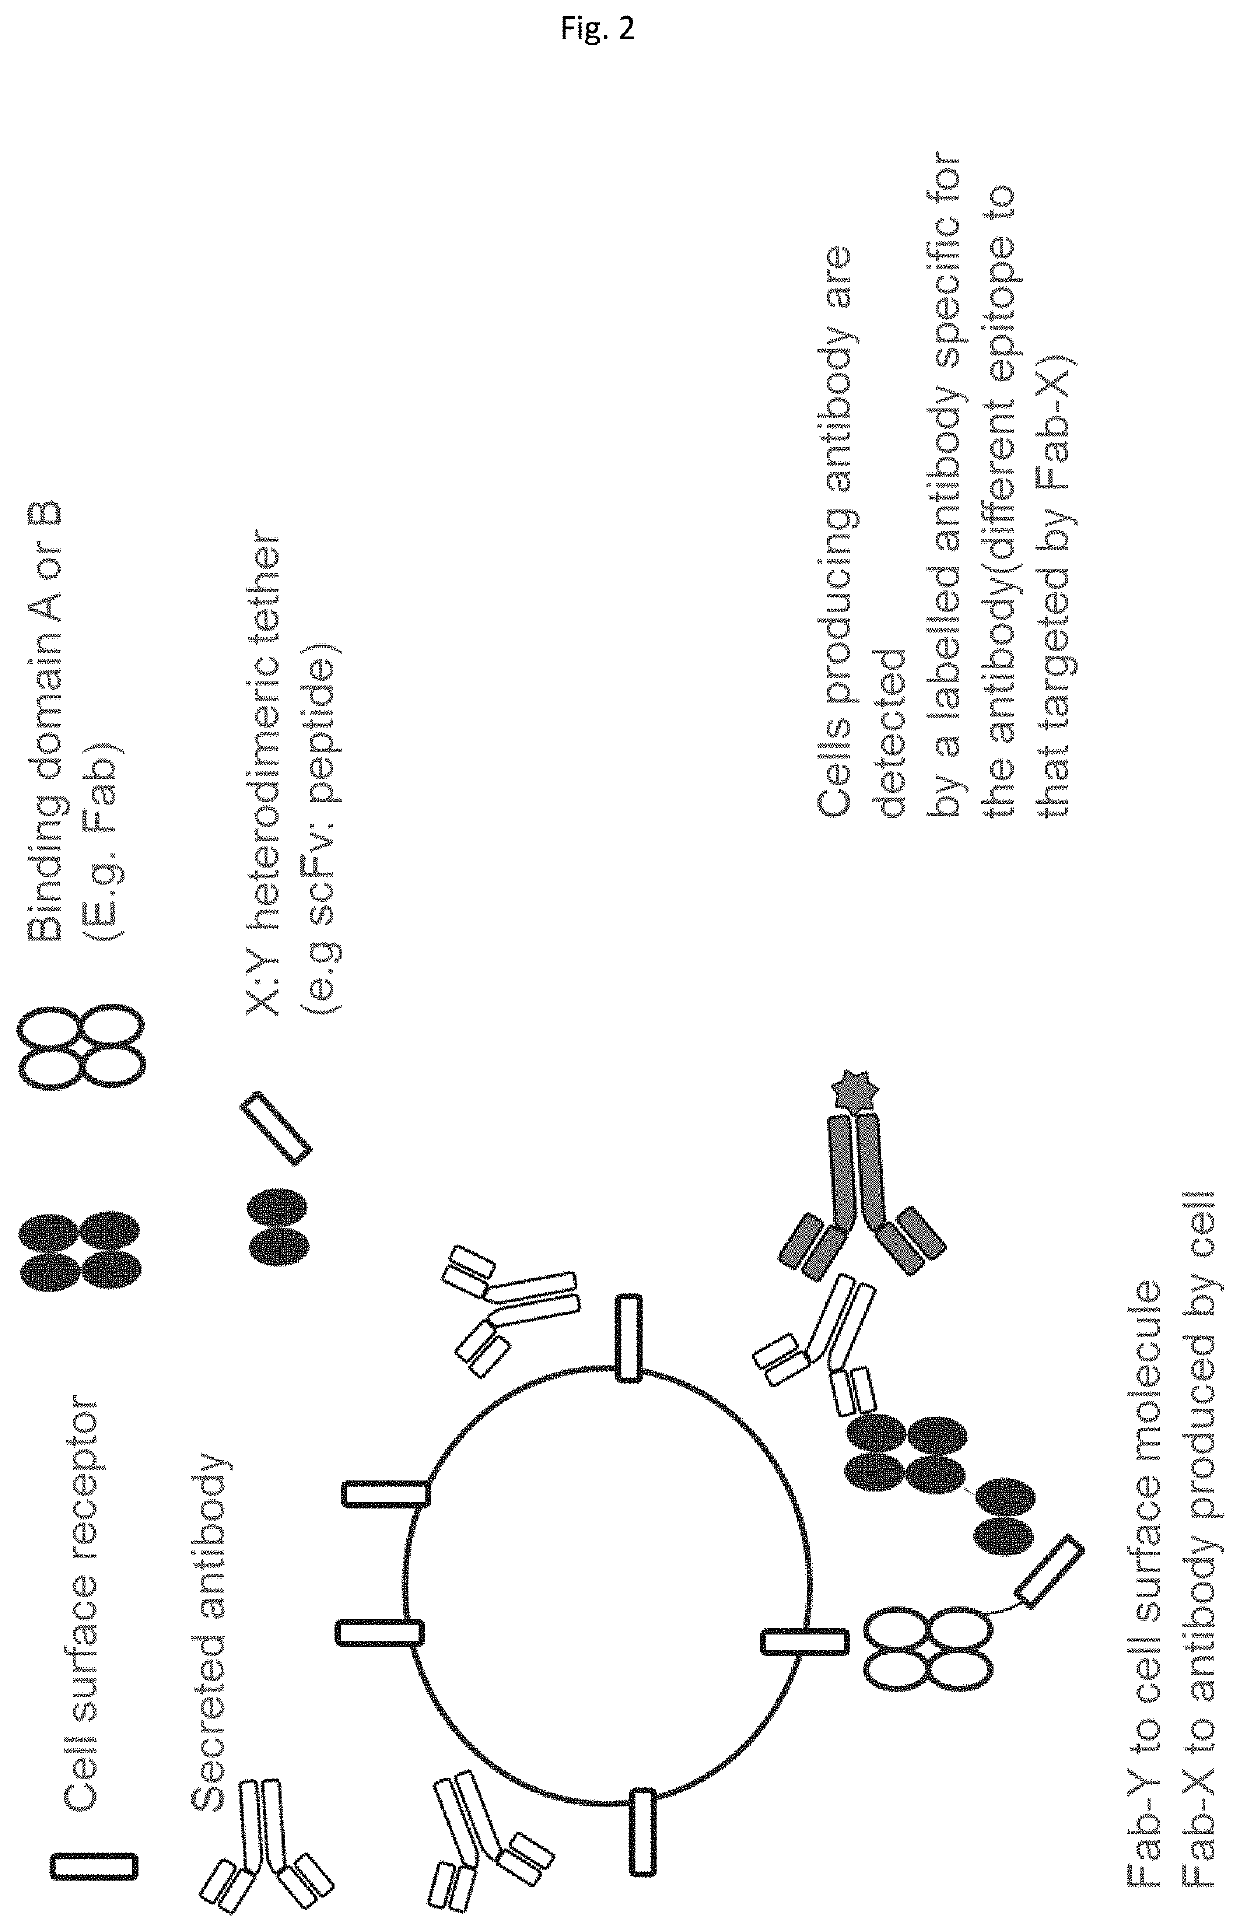 Method employing bispecific antibodies